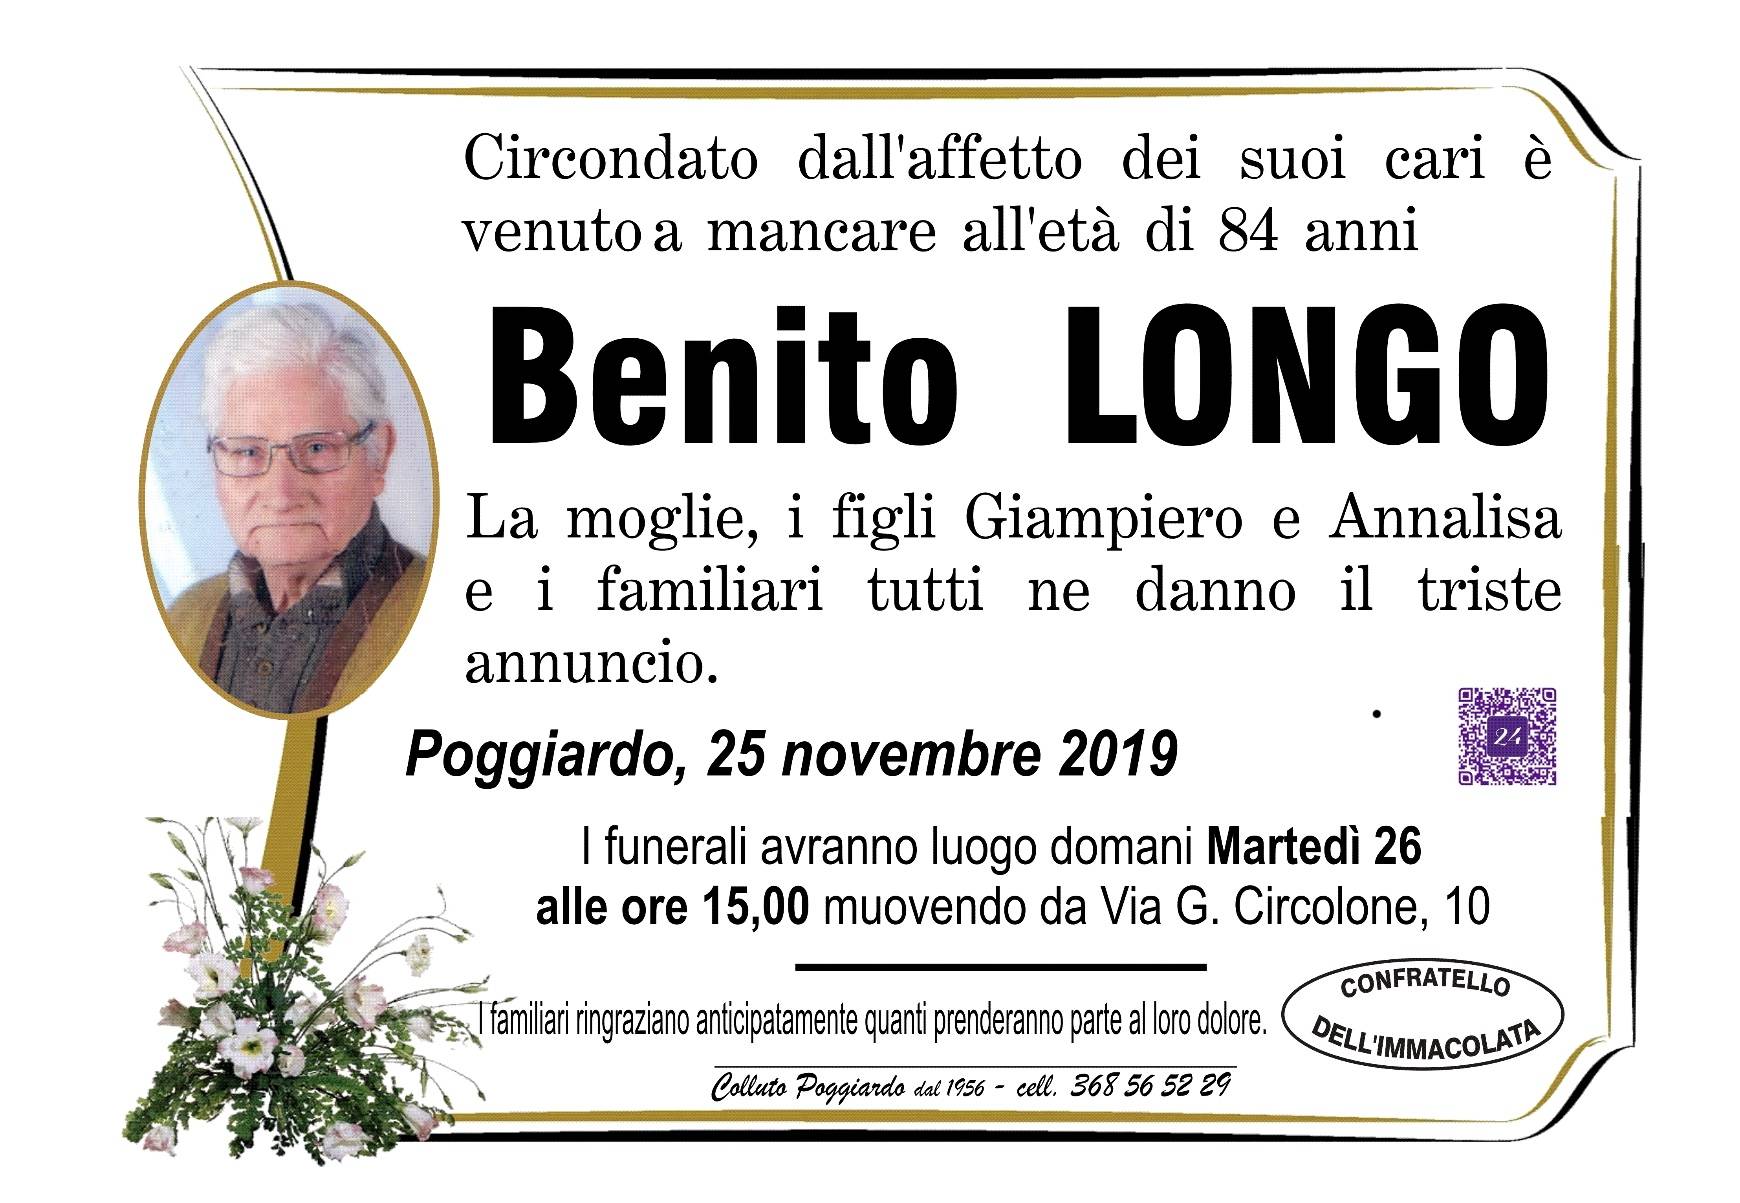 Benito Longo